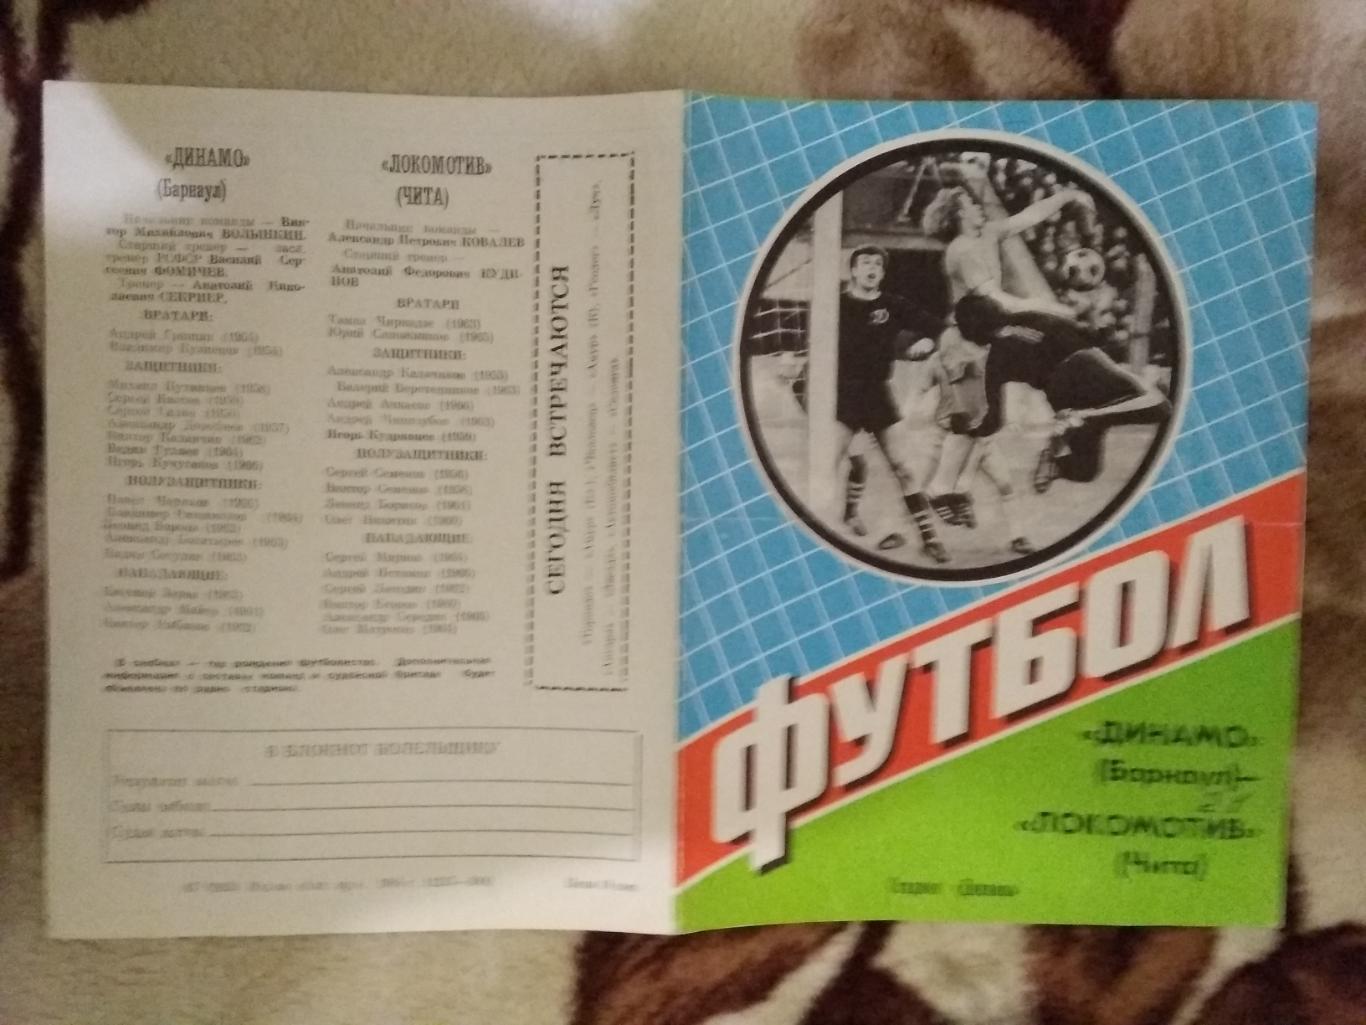 Динамо (Барнаул) - Локомотив (Чита) 1984 г.